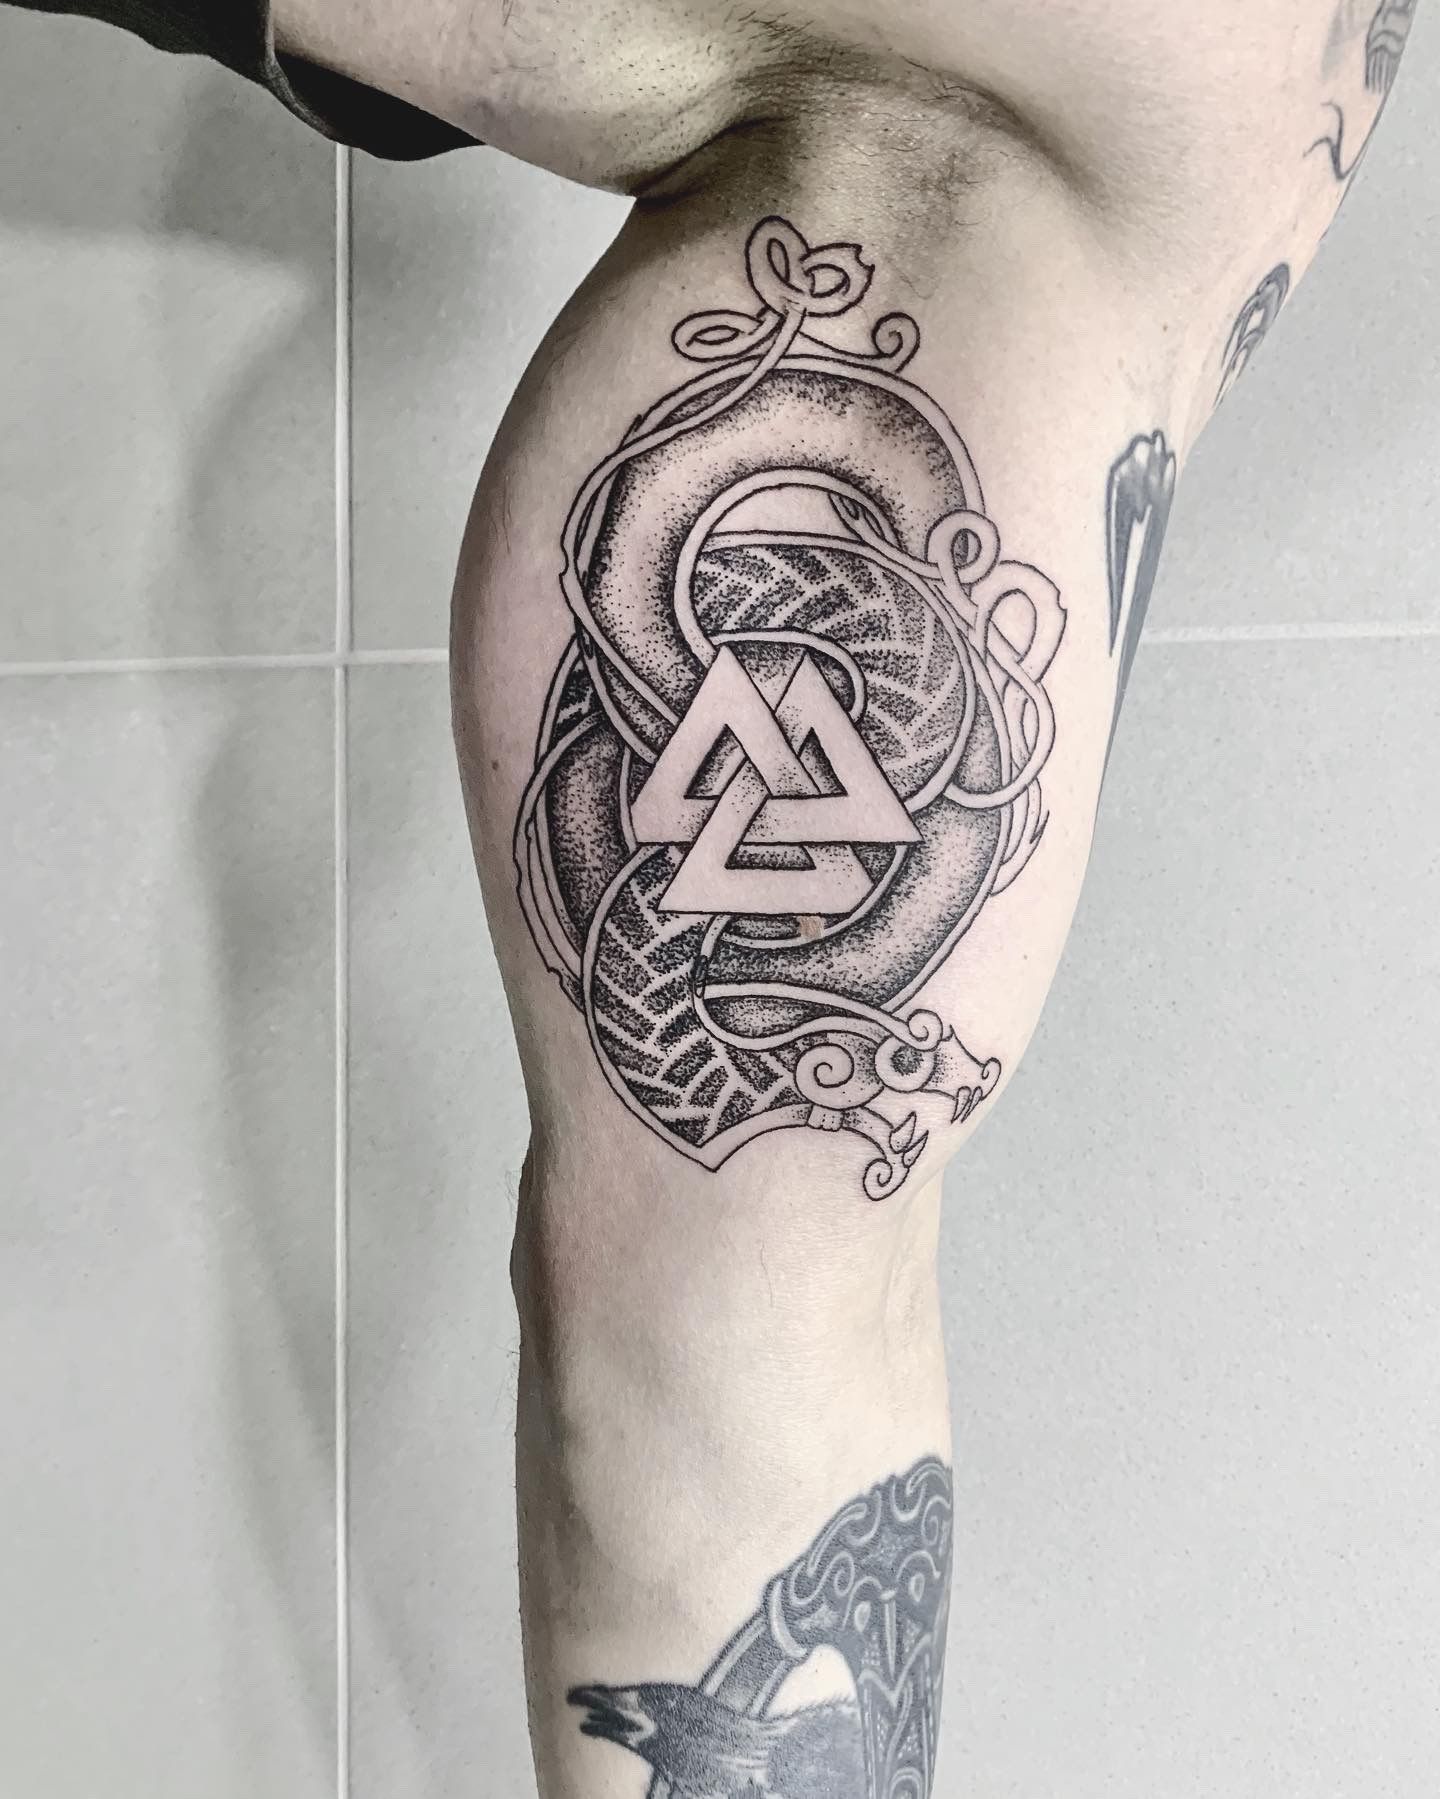 Logo: Solve et Coagula. Will be used as a tattoo design 🤙 #fyp #metal... |  TikTok